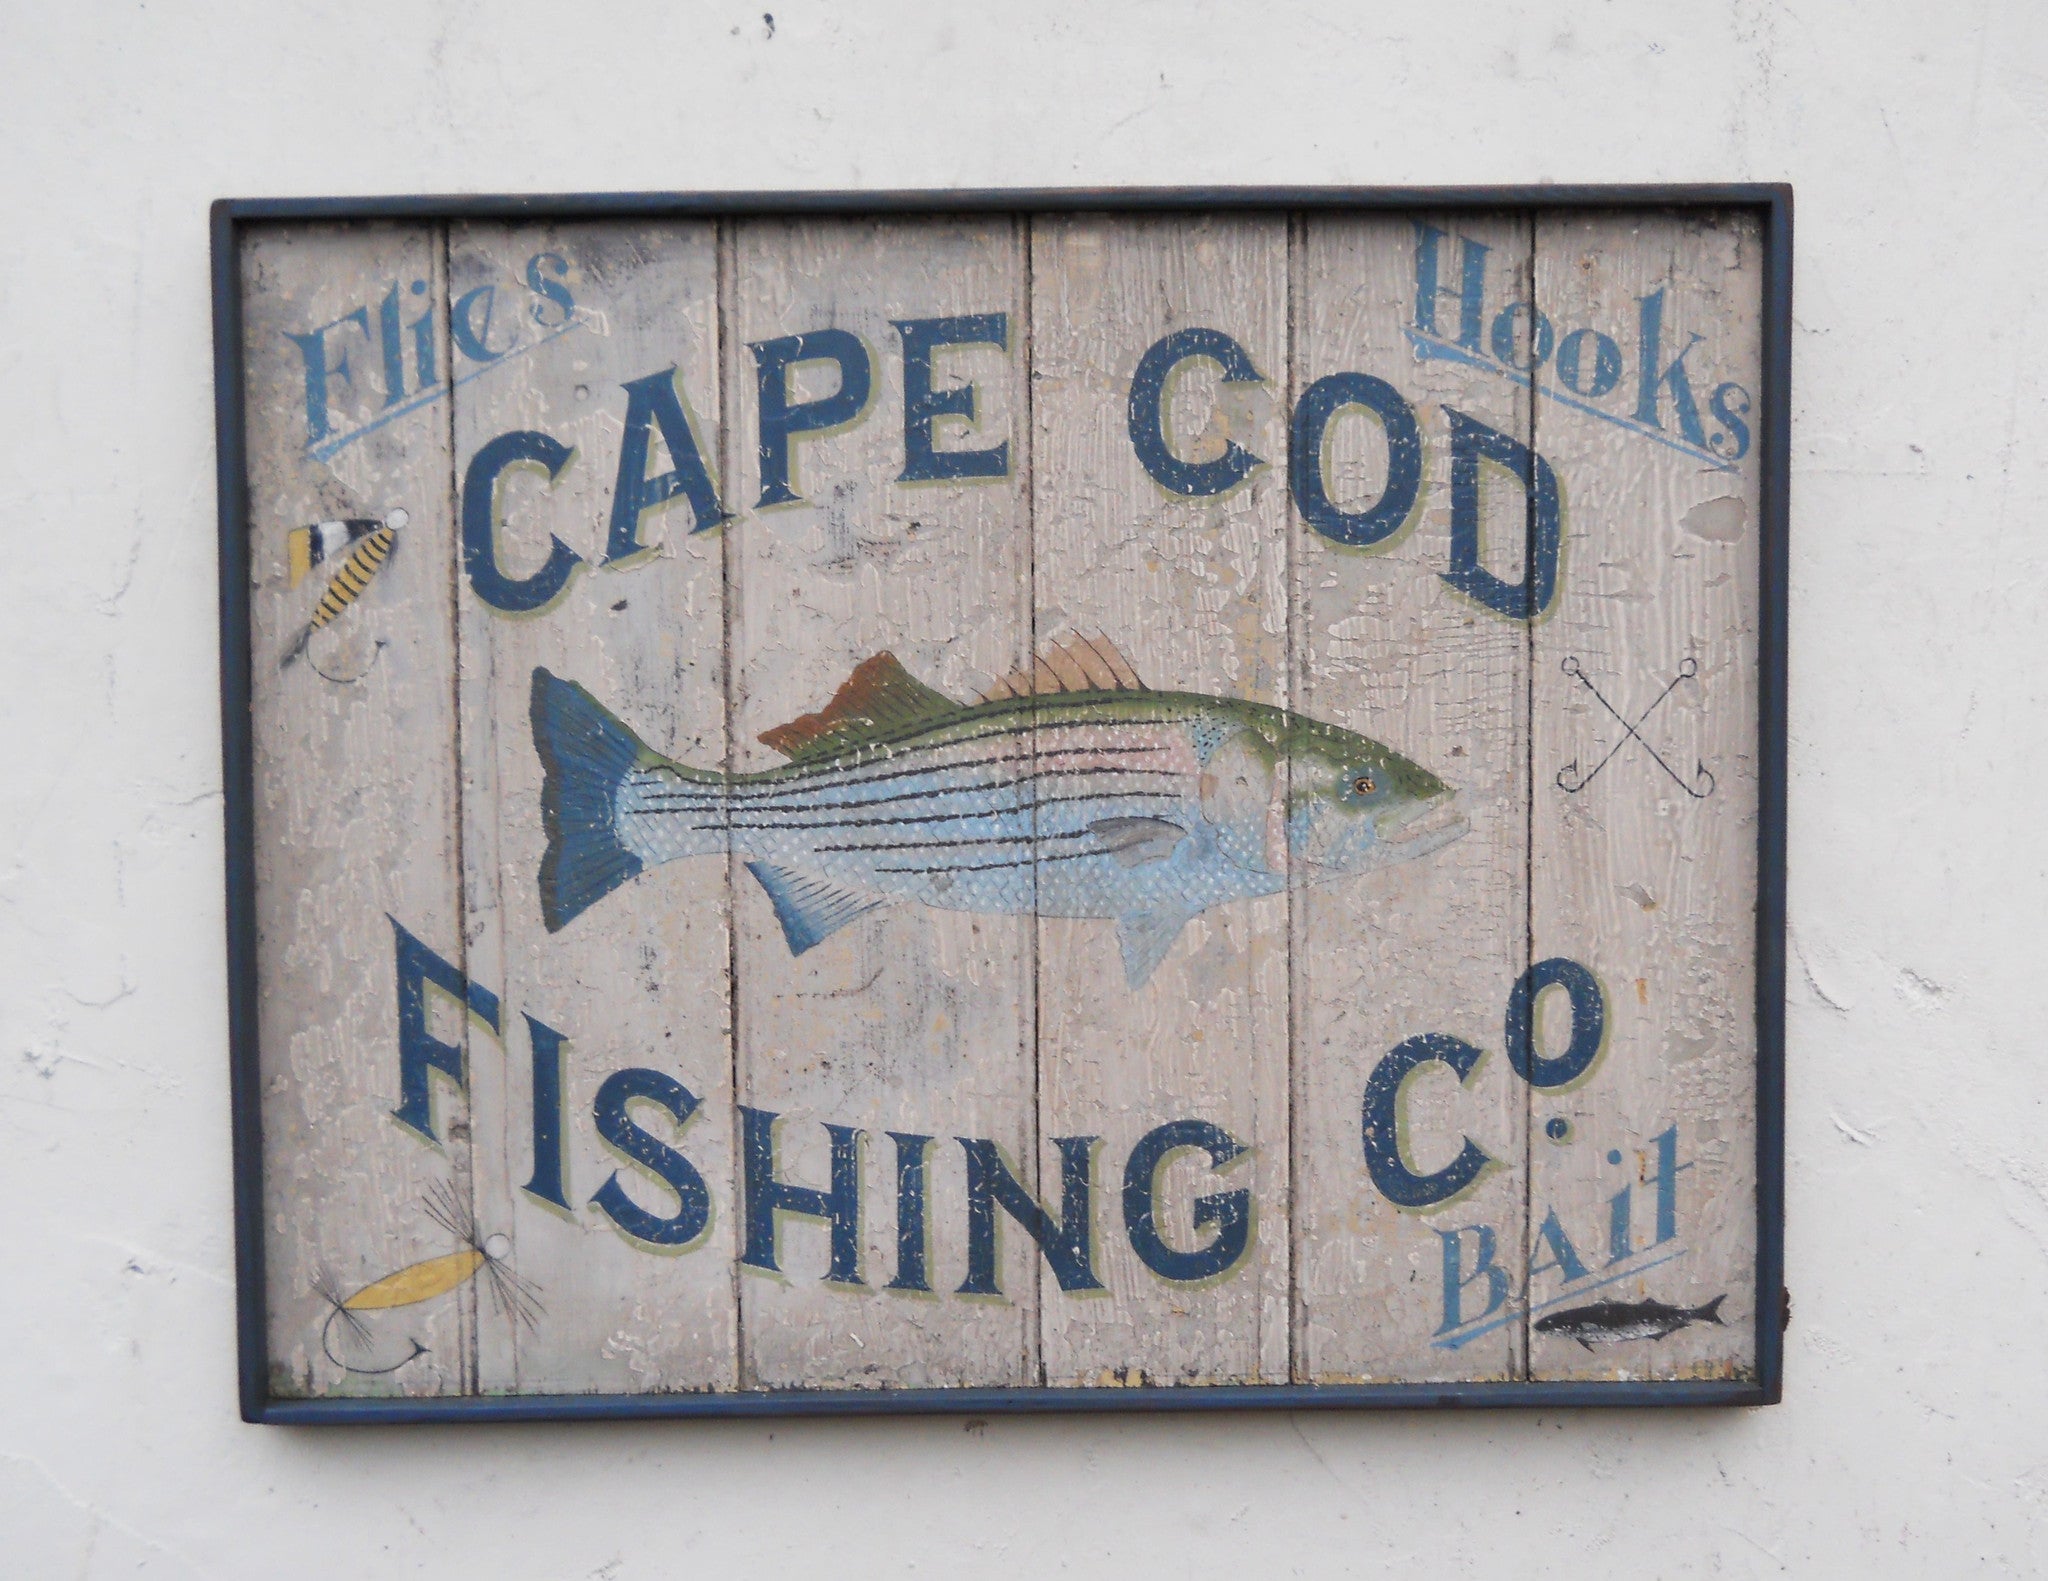 Cape Cod Fishing Co.